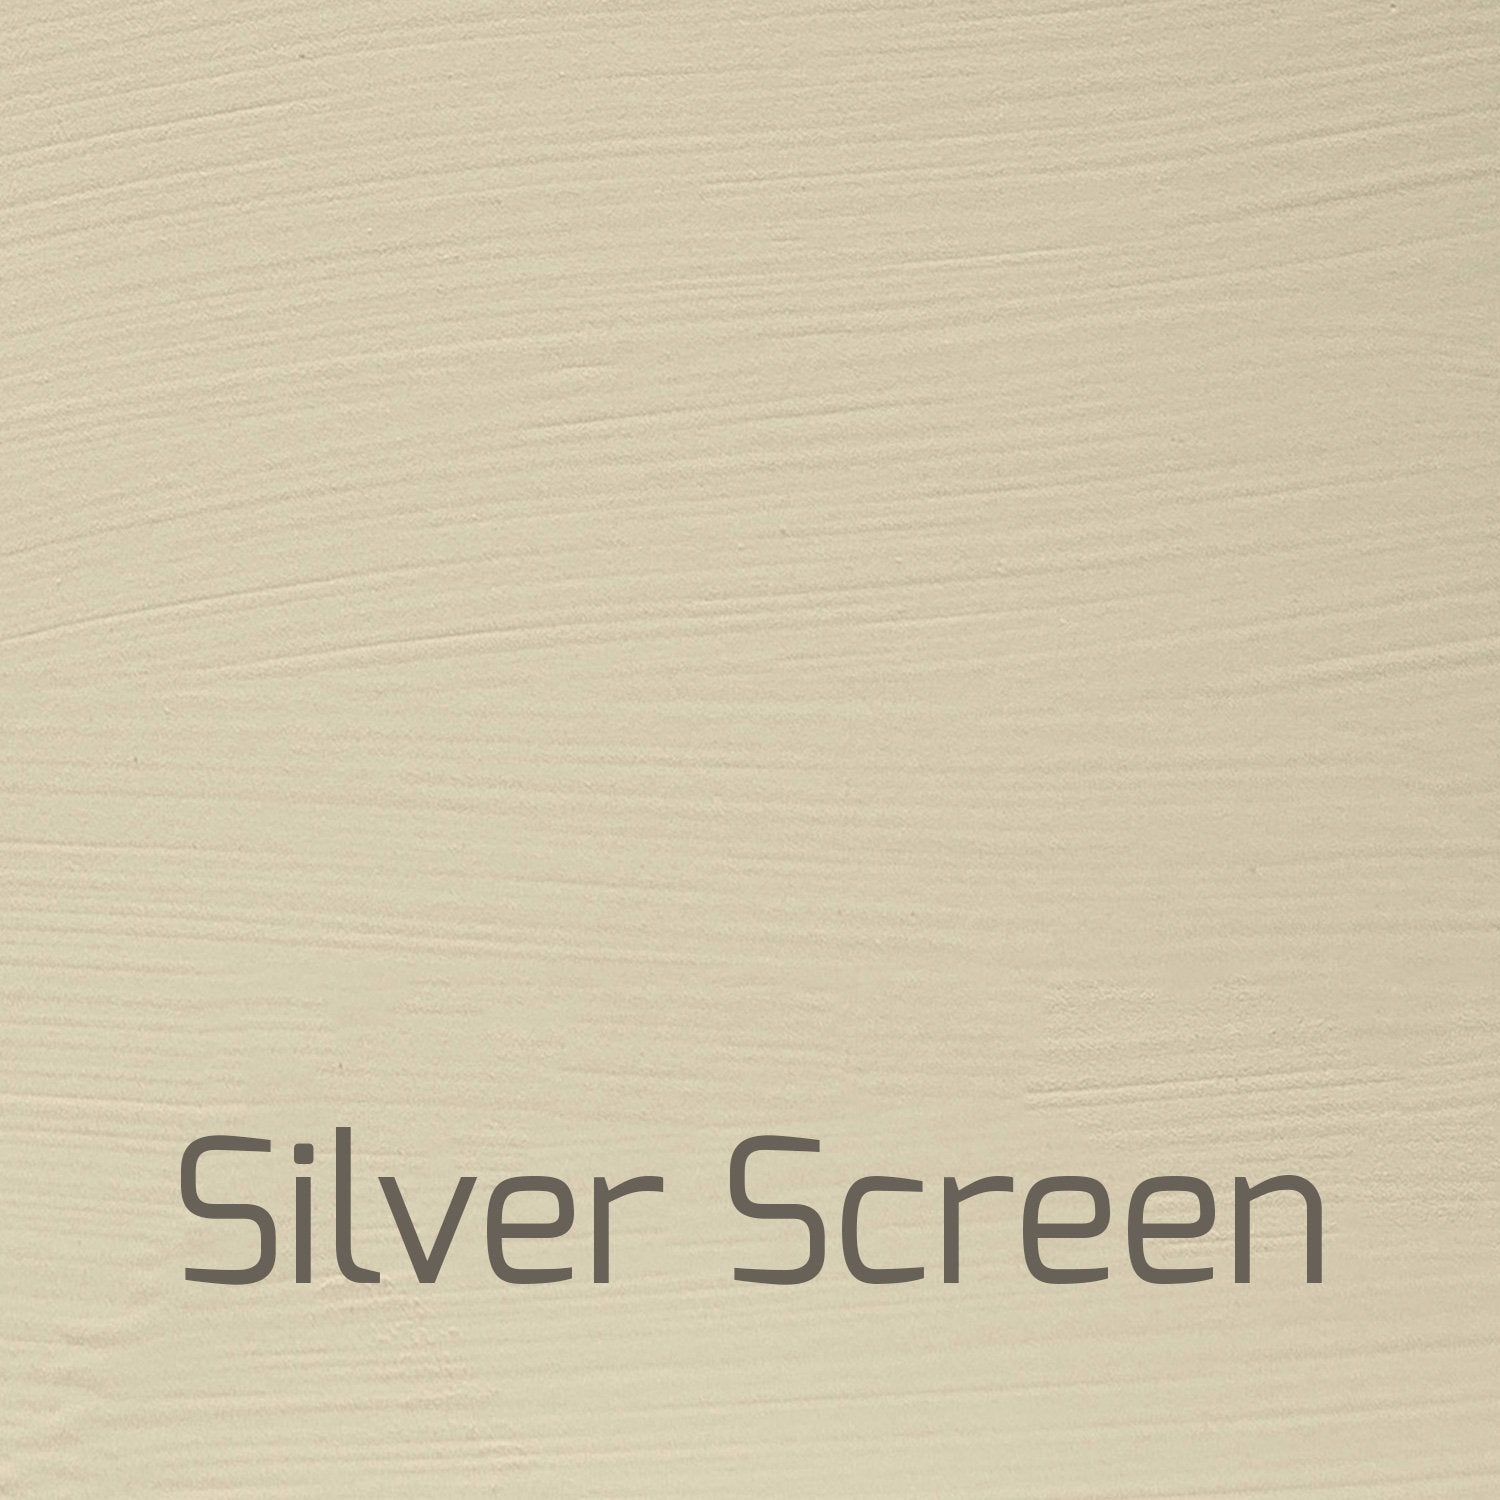 Silver Screen - Versante Matt-Versante Matt-Autentico Paint Online